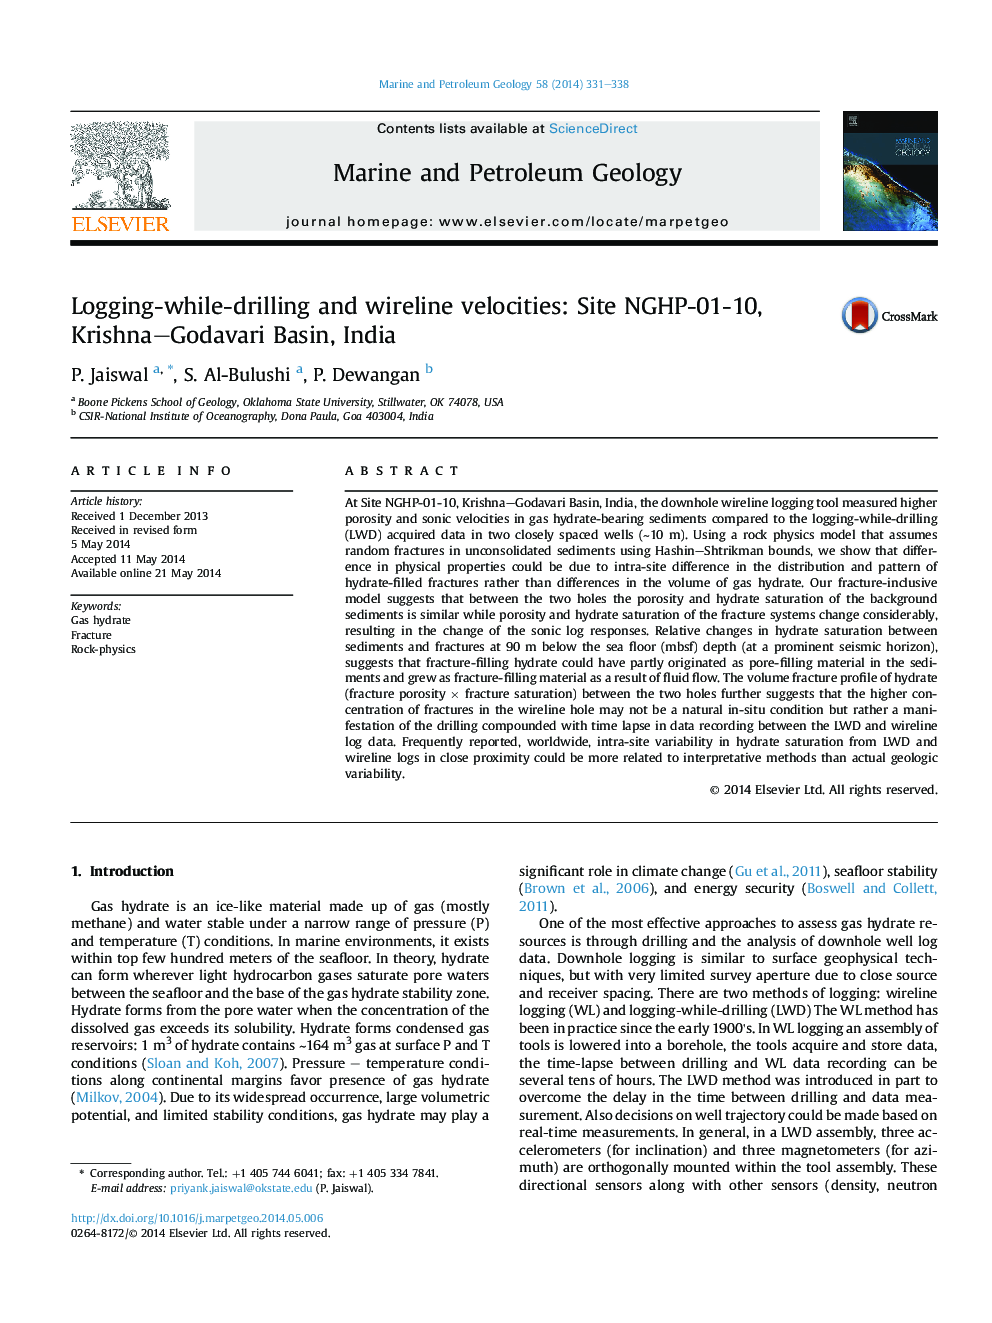 Logging-while-drilling and wireline velocities: Site NGHP-01-10, Krishna-Godavari Basin, India